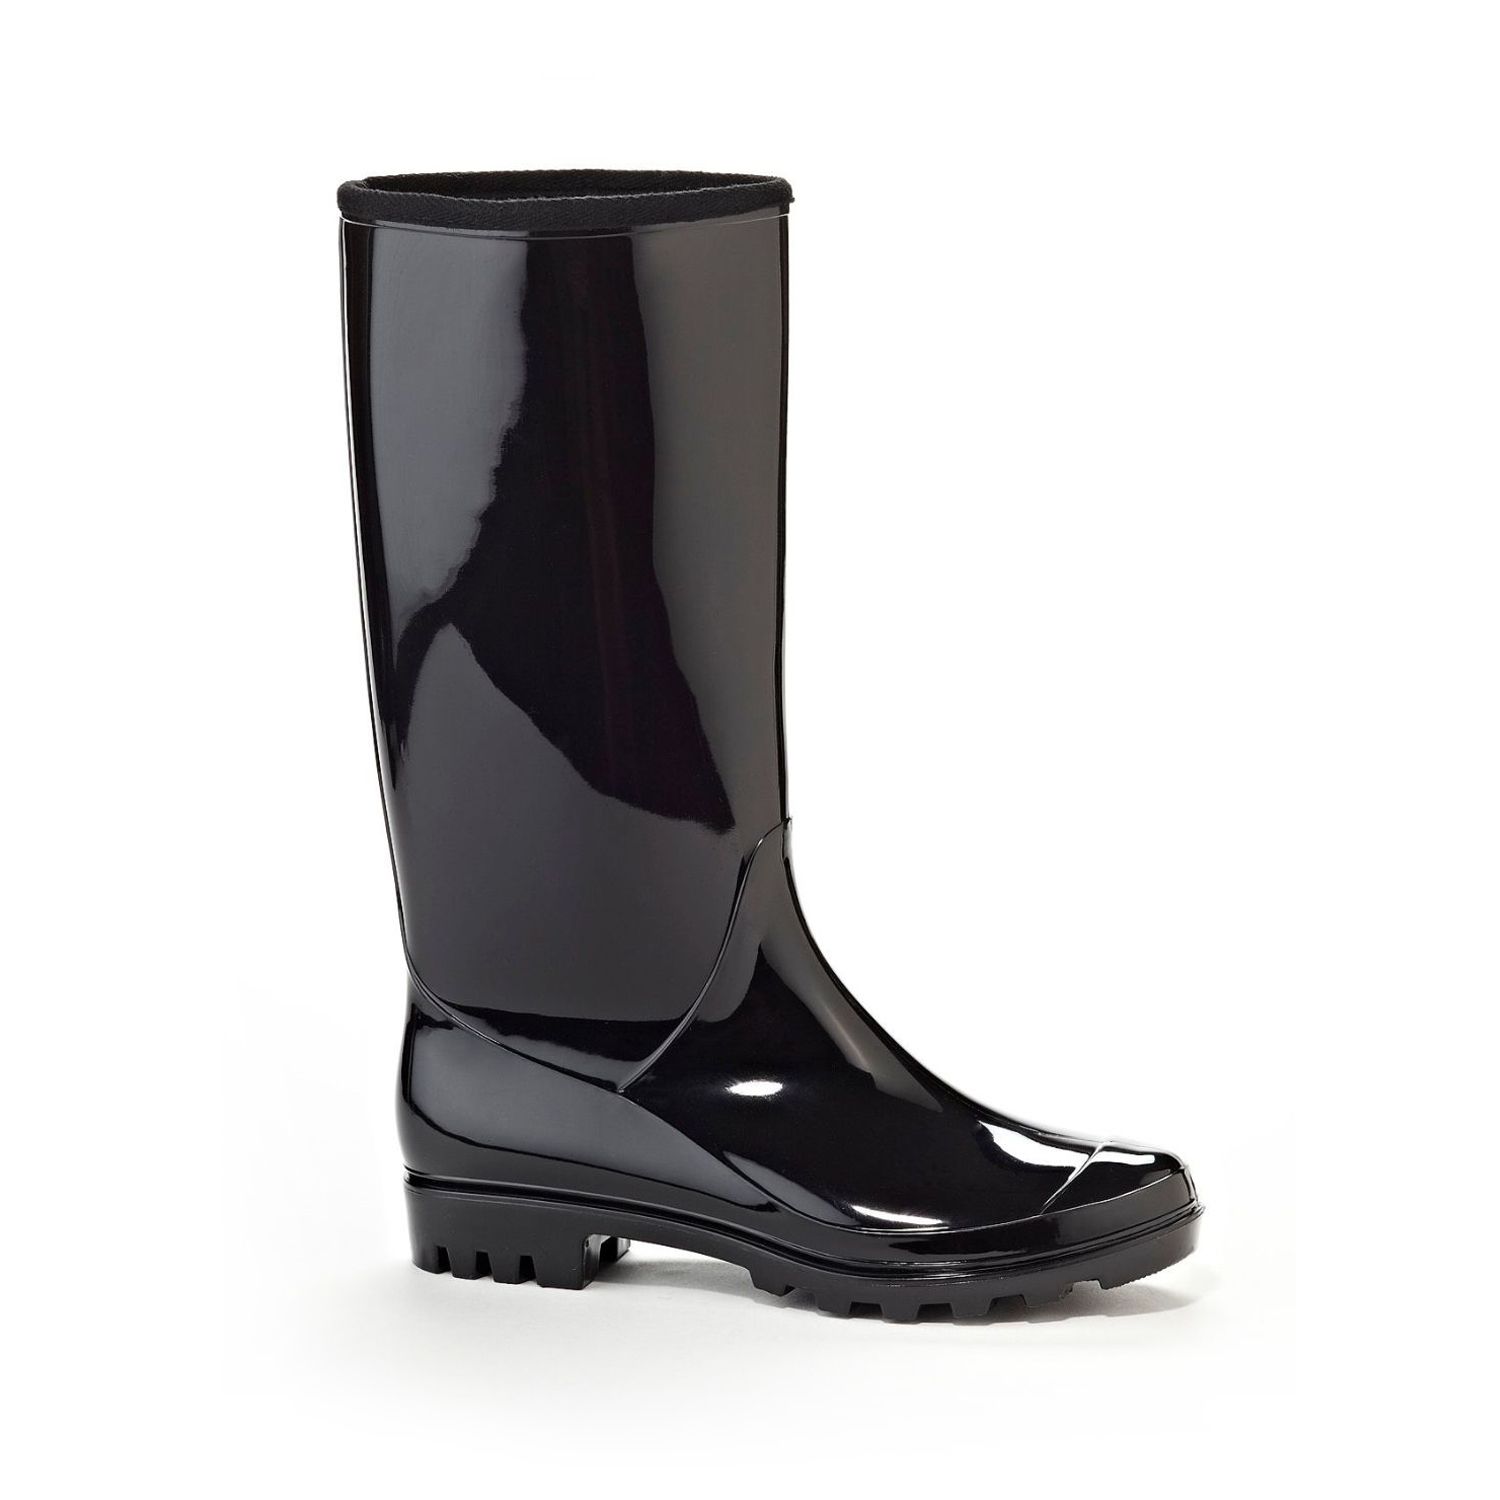 Image for Henry Ferrera Shiny Thunder Women's Rain Boots at Kohl's.